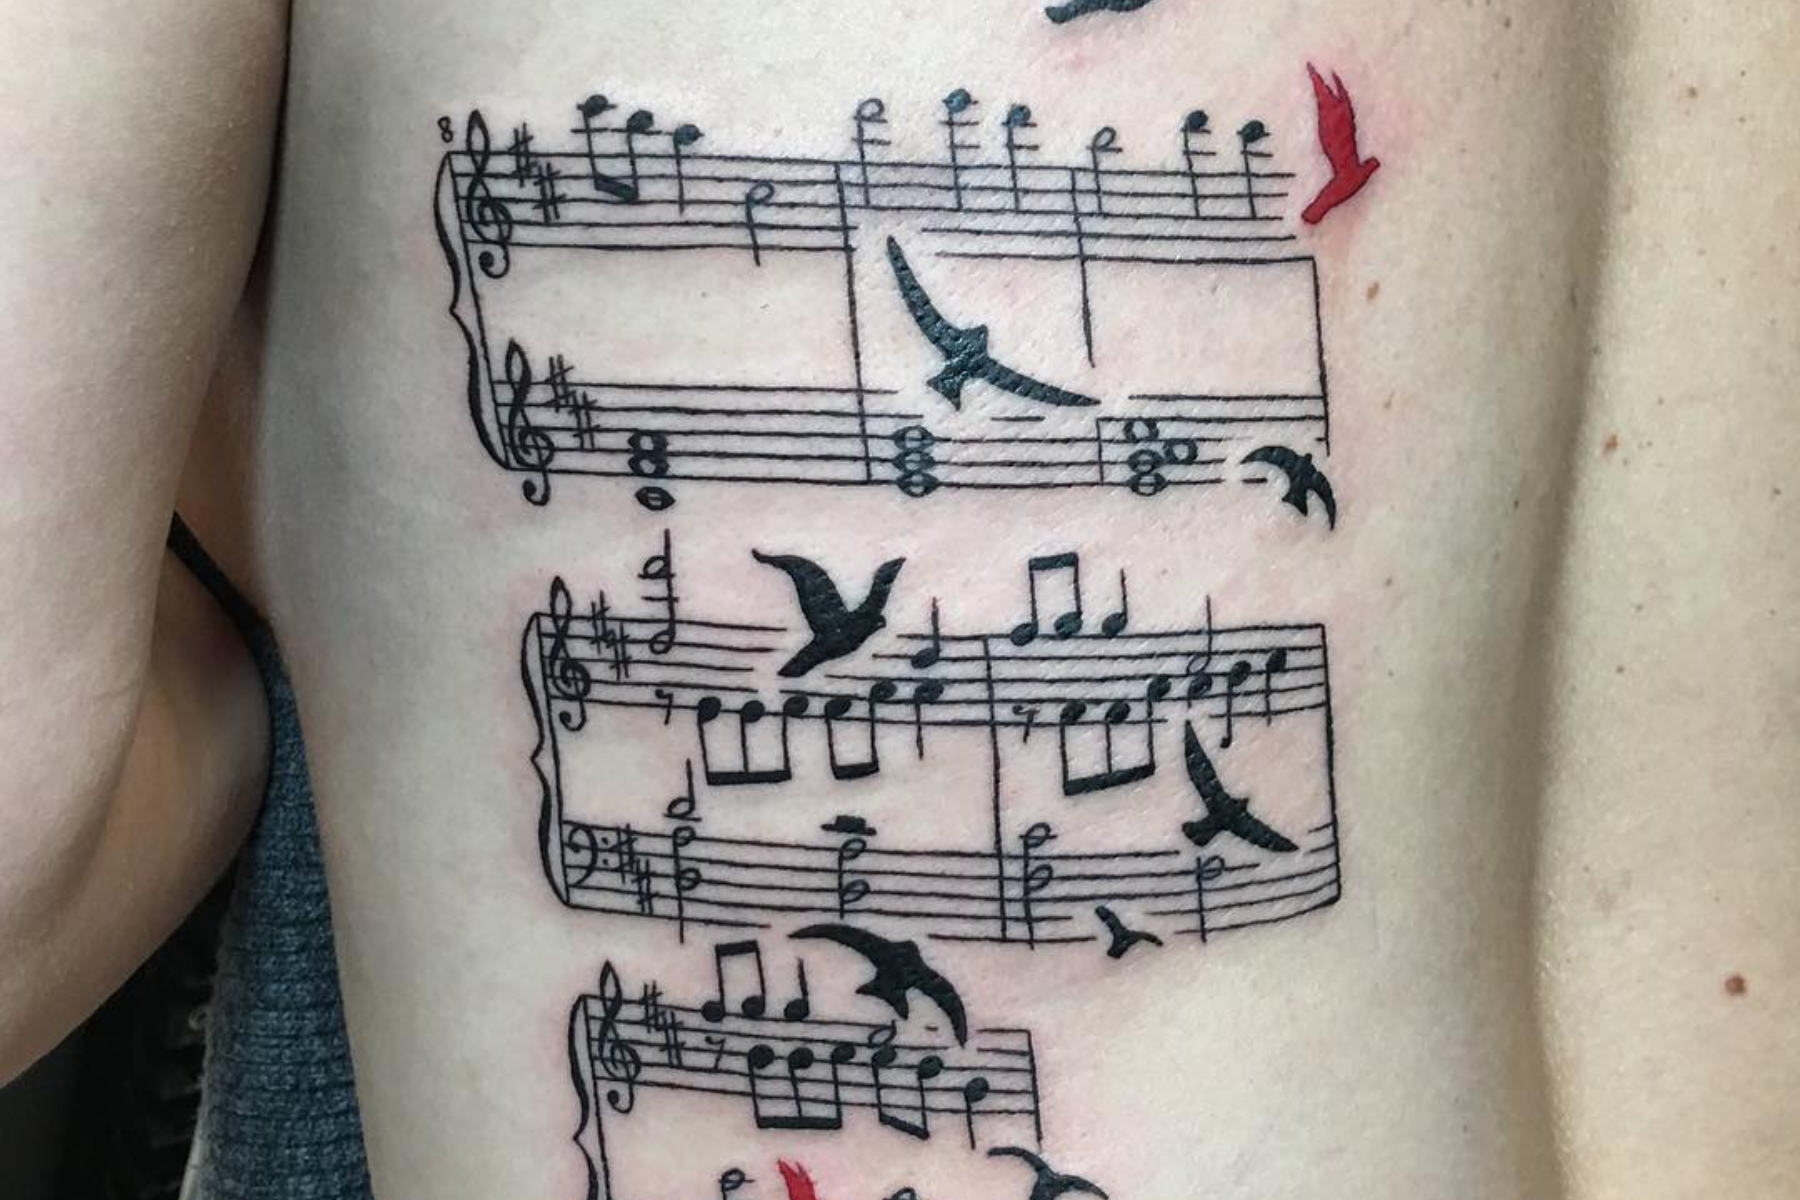 Minimalist Music Temporary Tattoo Sticker Idea, Music is Life Tattoo, Music  Lover Tattoo, Minimalist Tattoo Design, Waterproof Fake Tattoo - Etsy